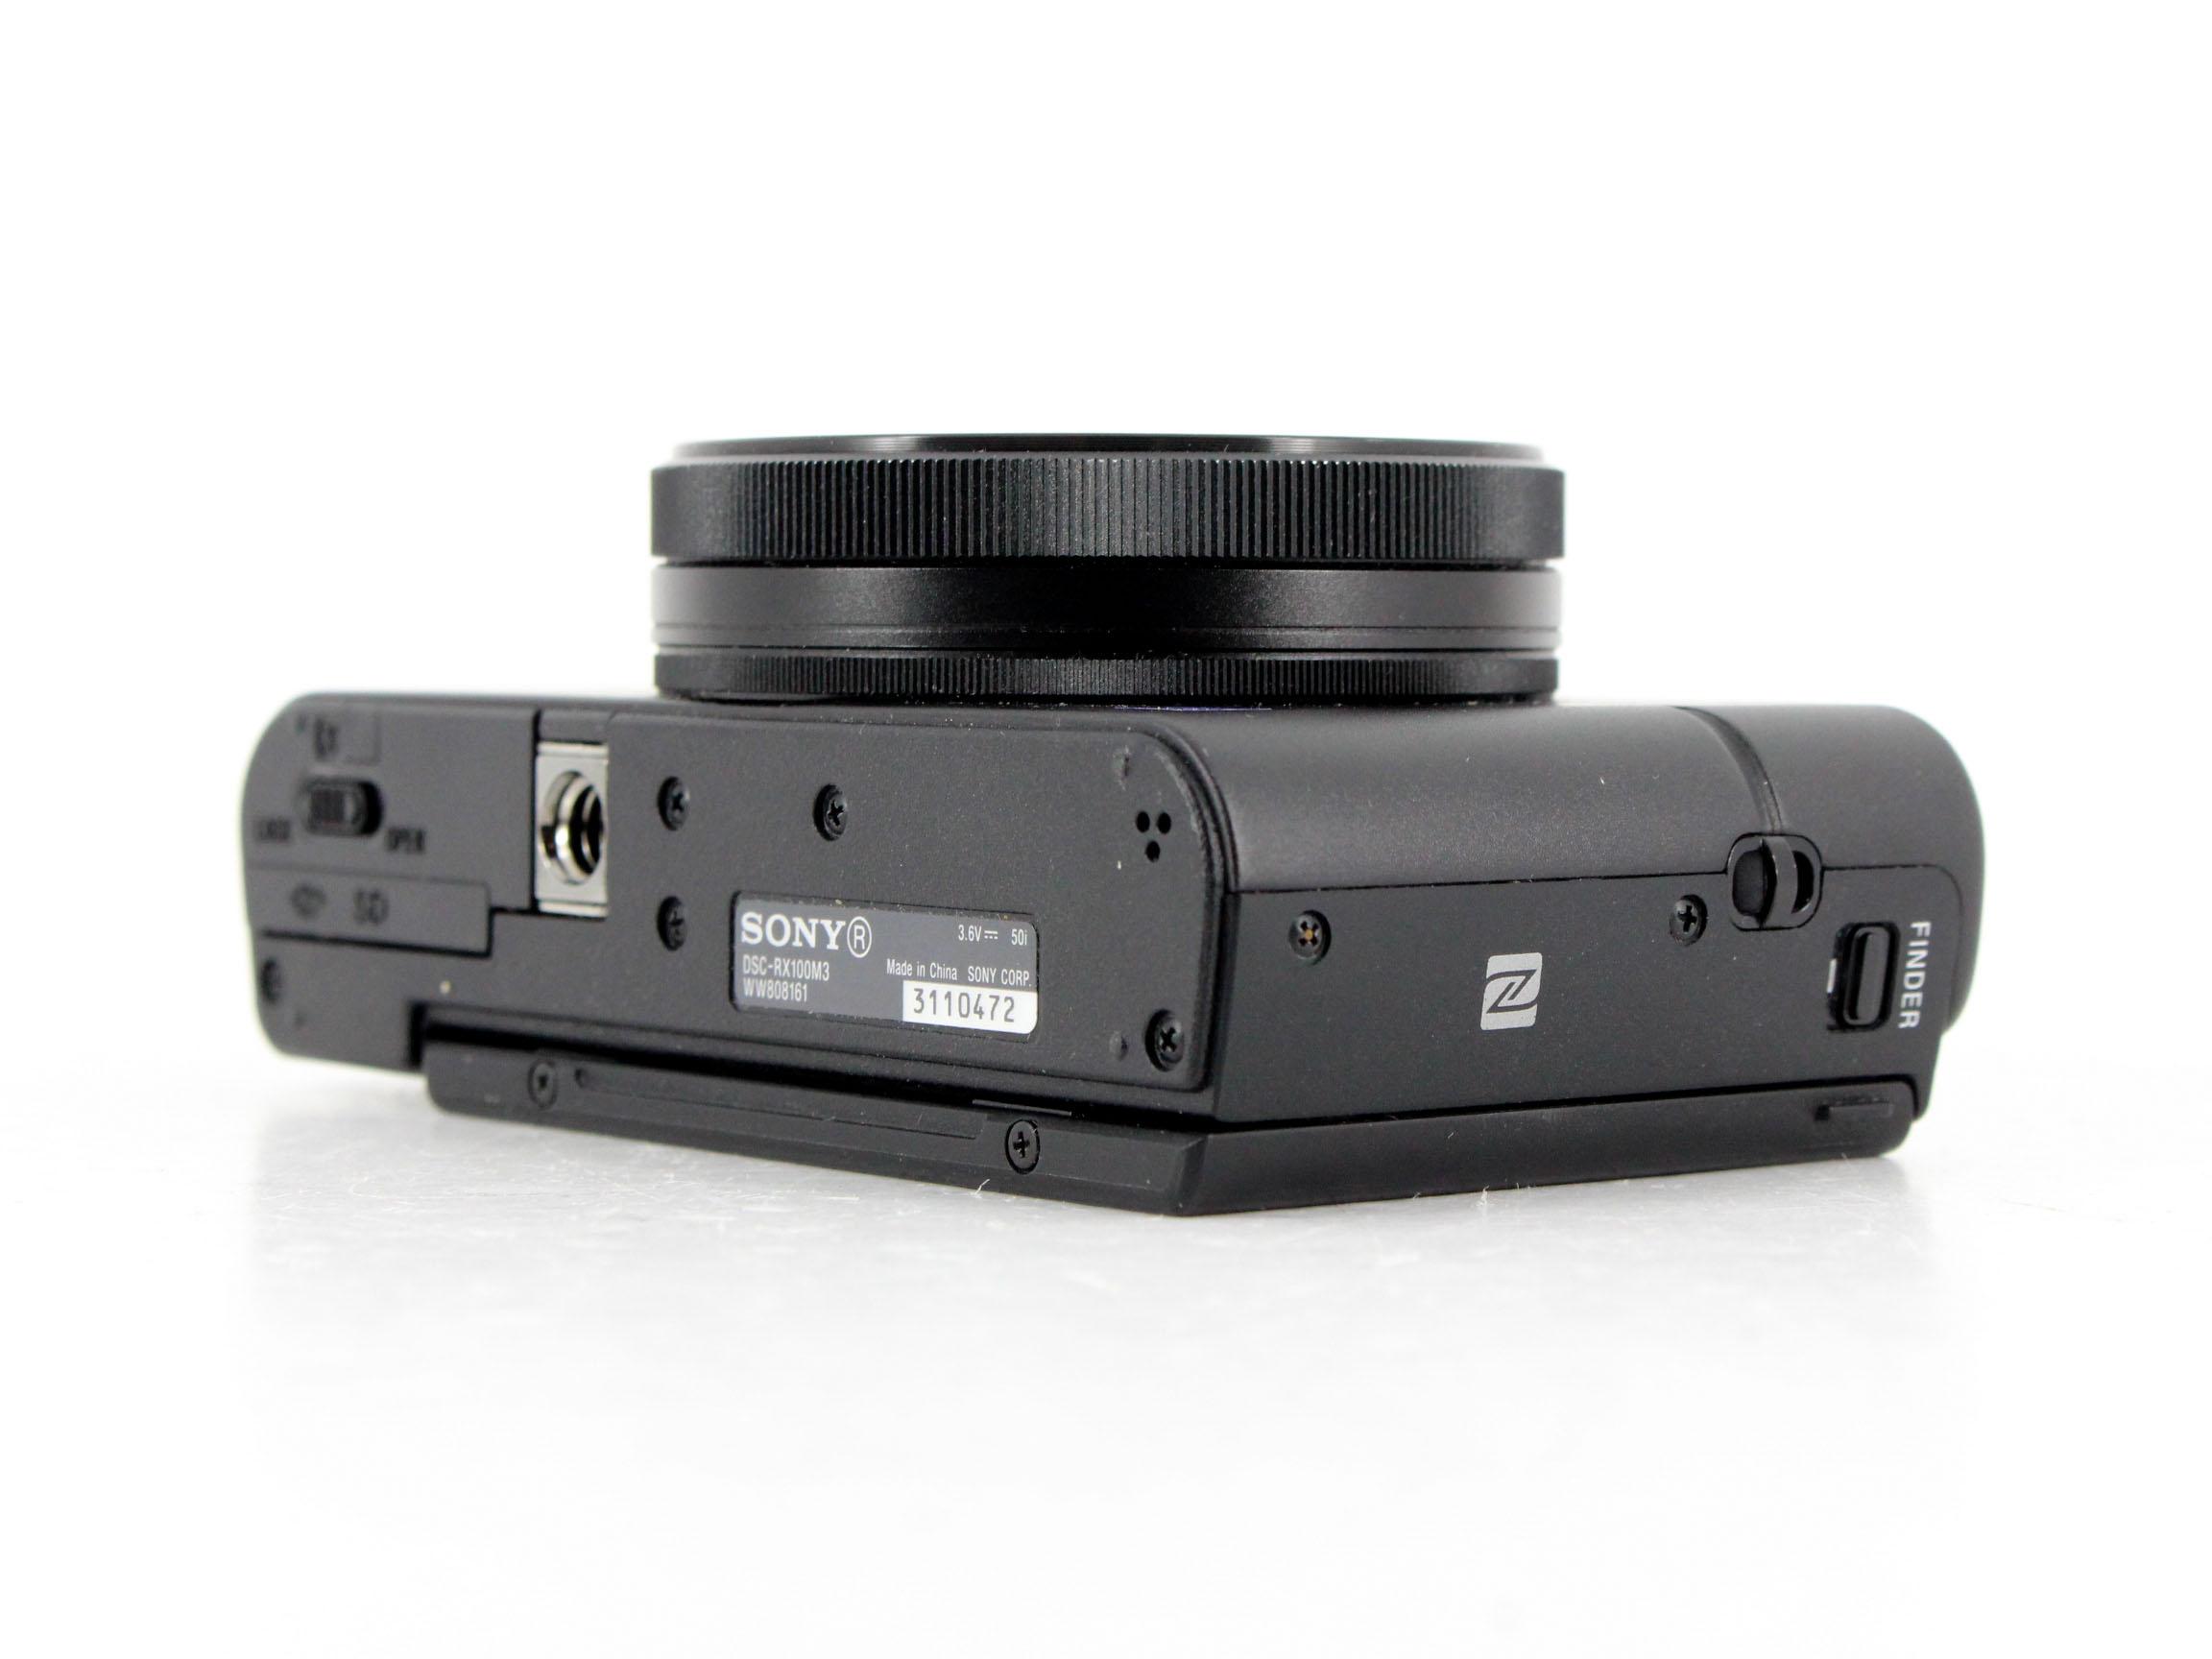 Sony Cyber-shot RX100 III M3 20.1MP Digital Camera